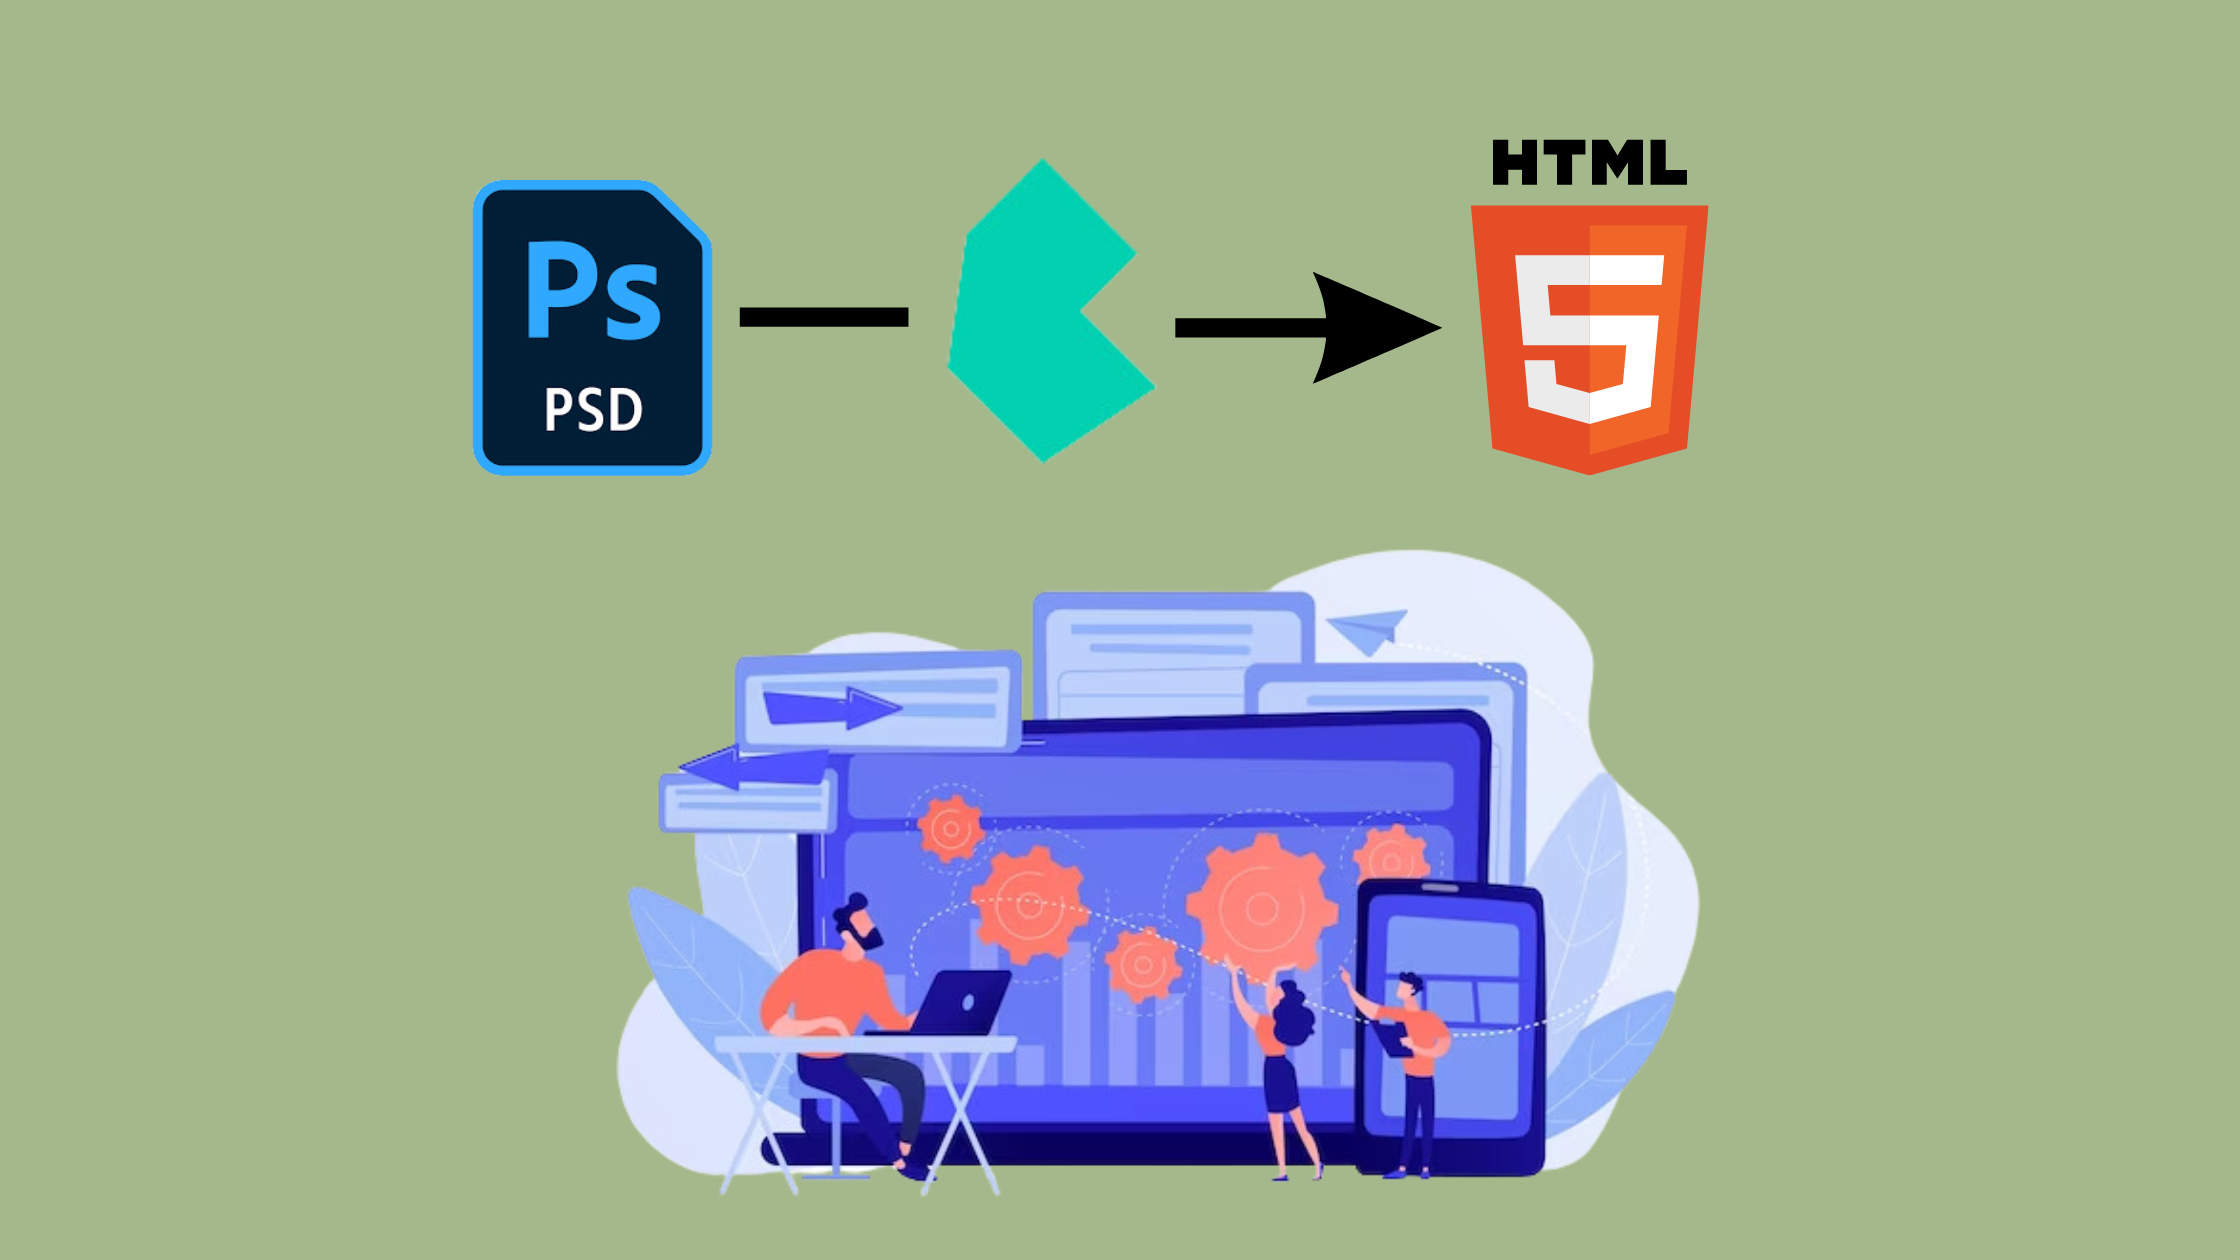 Bulma PSD to HTML conversion Framework